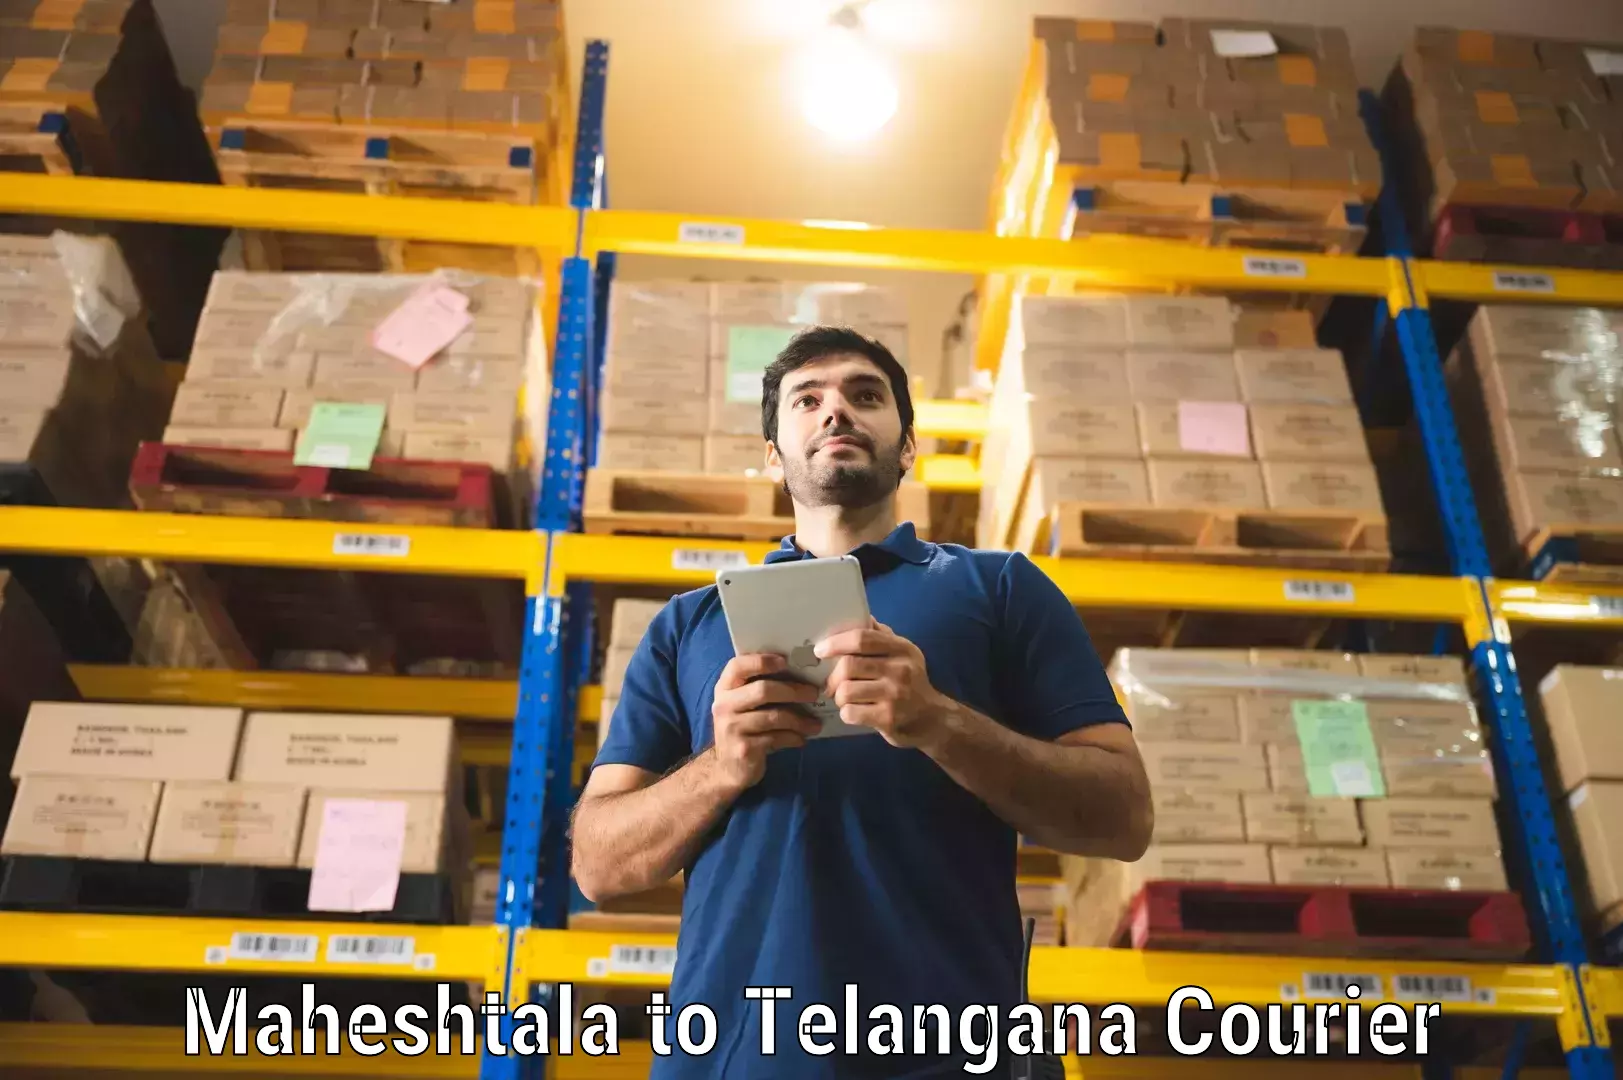 Remote area delivery in Maheshtala to Telangana